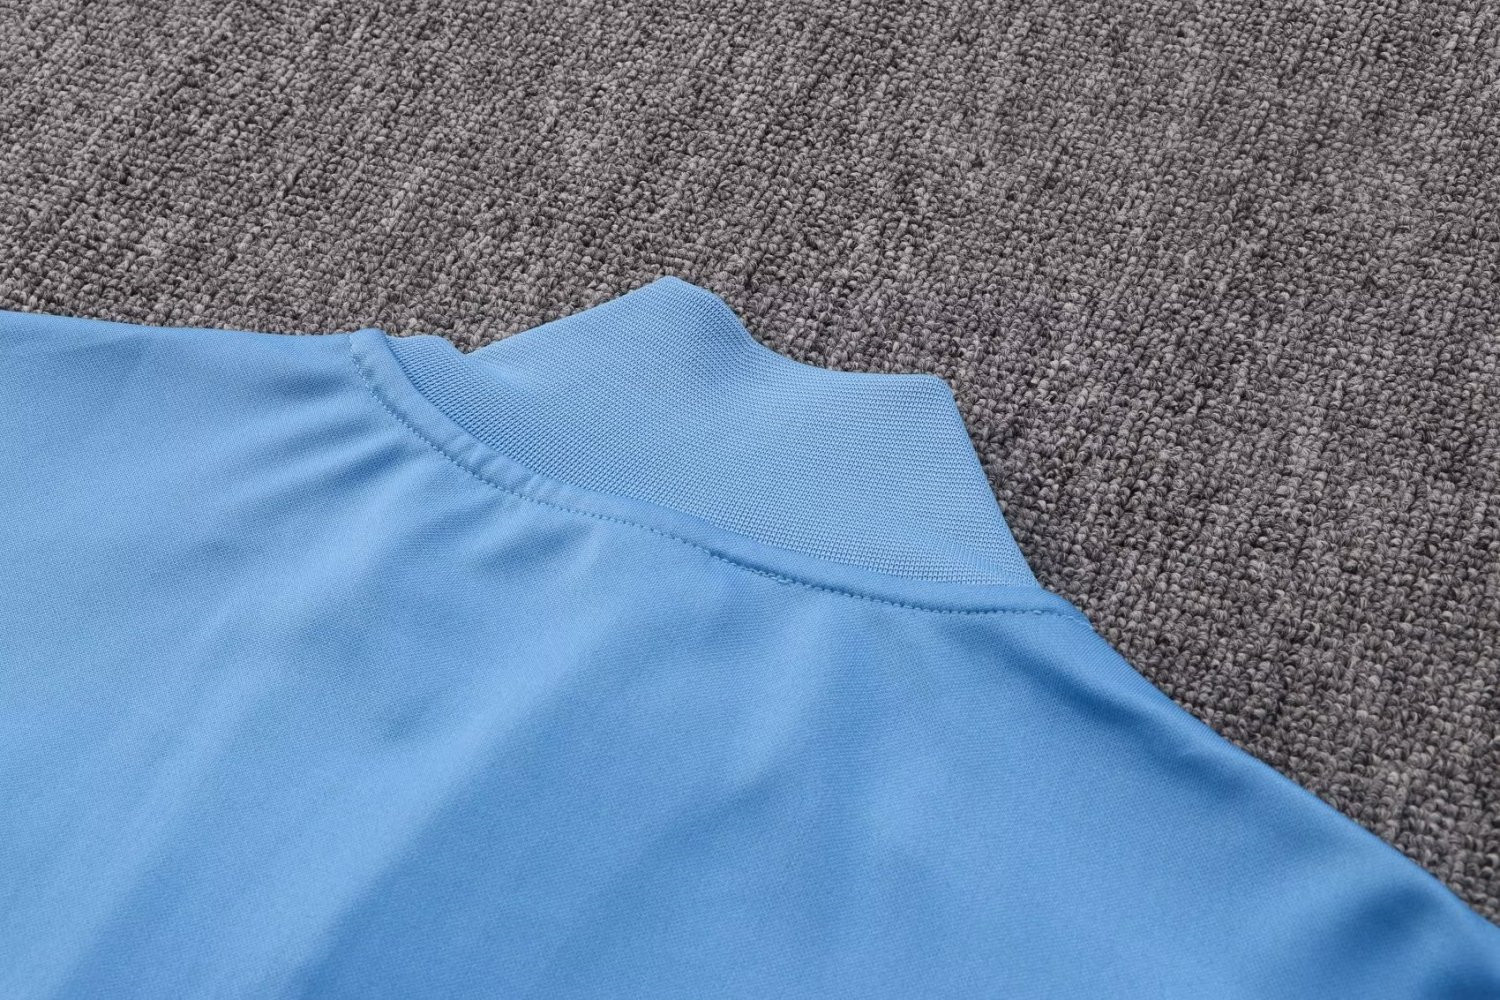 Manchester United Soccer Jacket + Pants Replica Light Blue 2022/23 Mens